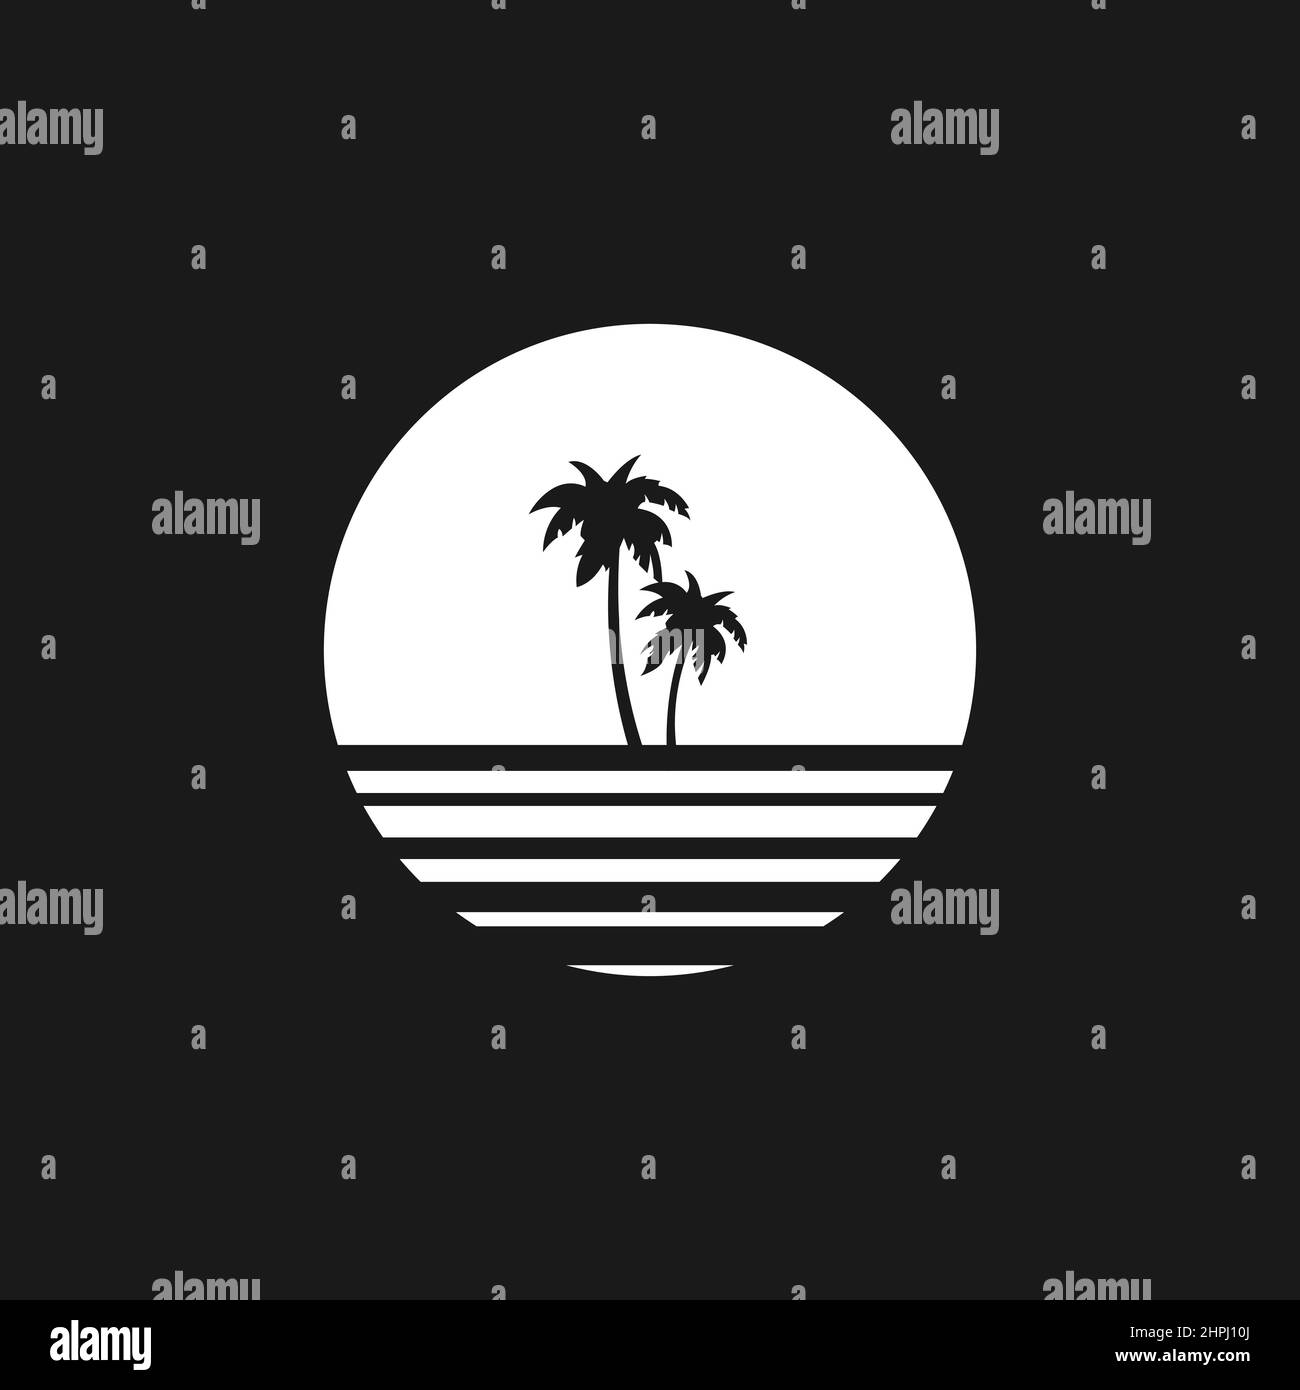 RetroWave Sonne, Sonnenuntergang oder Sonnenaufgang 1980s Stil mit Palmen Silhouetten. Schwarz-weiße Sonne mit Streifen und Palmen-Silhouetten. Designelement Stock Vektor